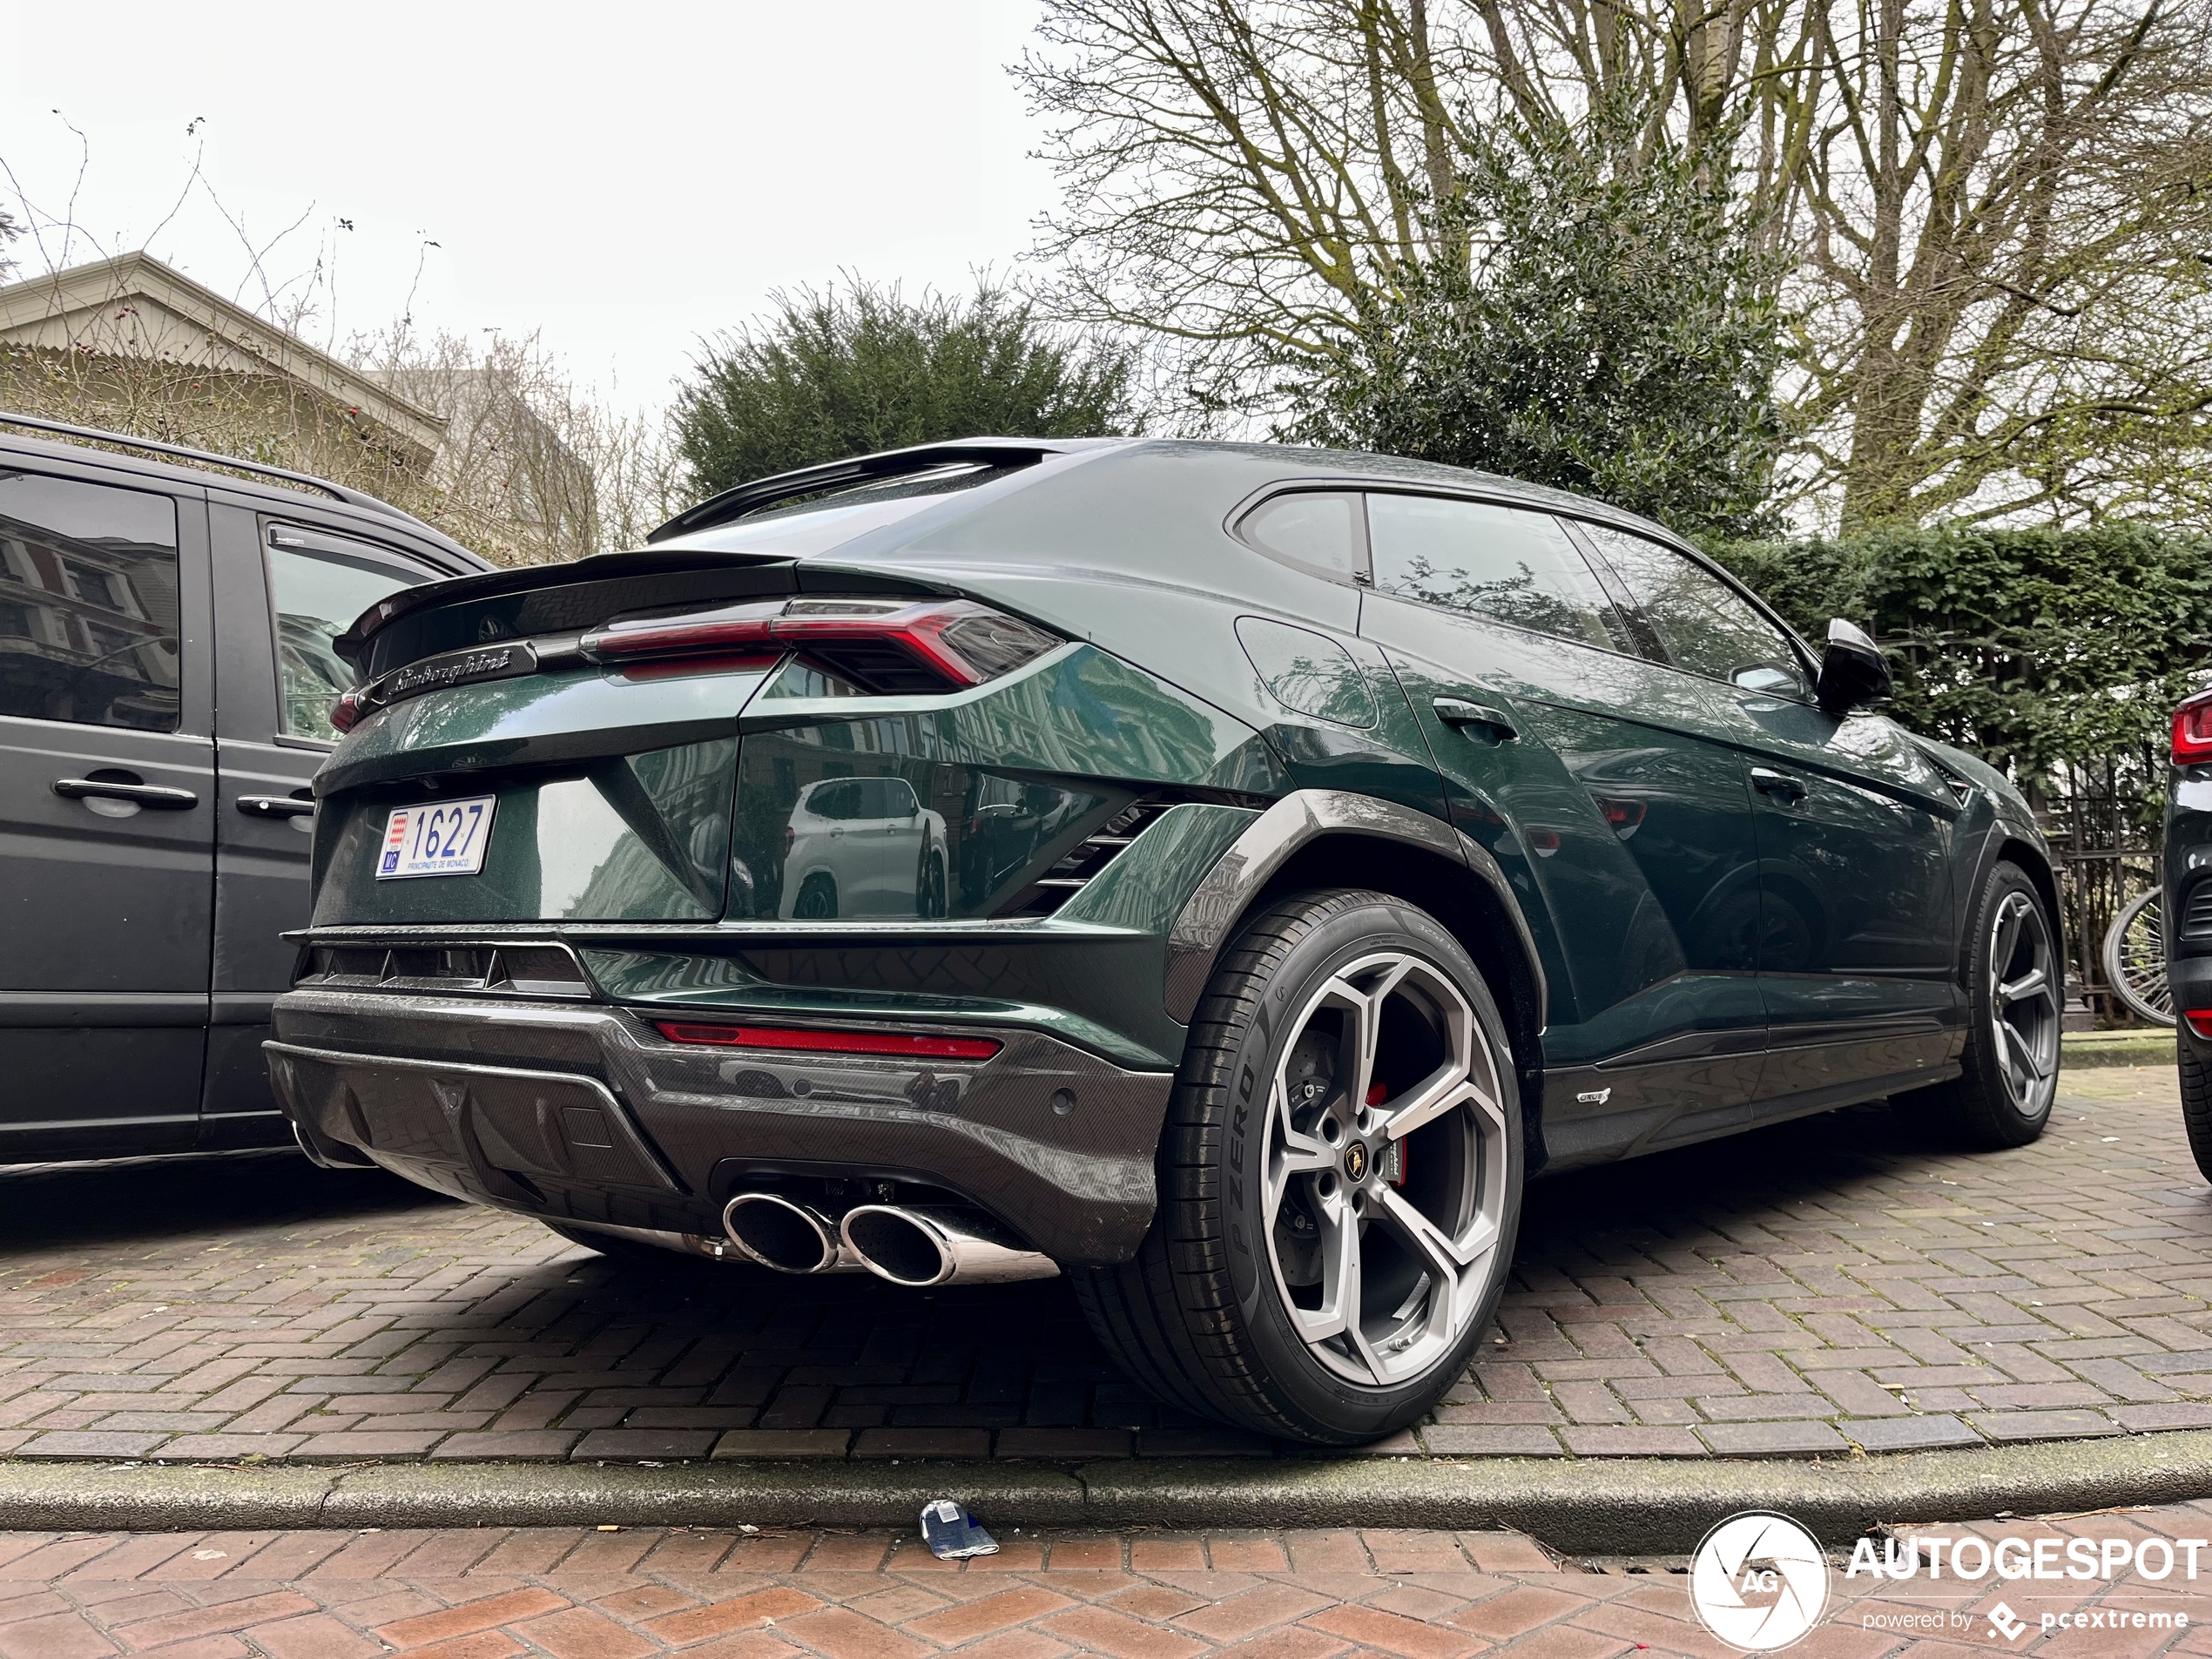 De eerste Lamborghini Urus S in Nederland gespot